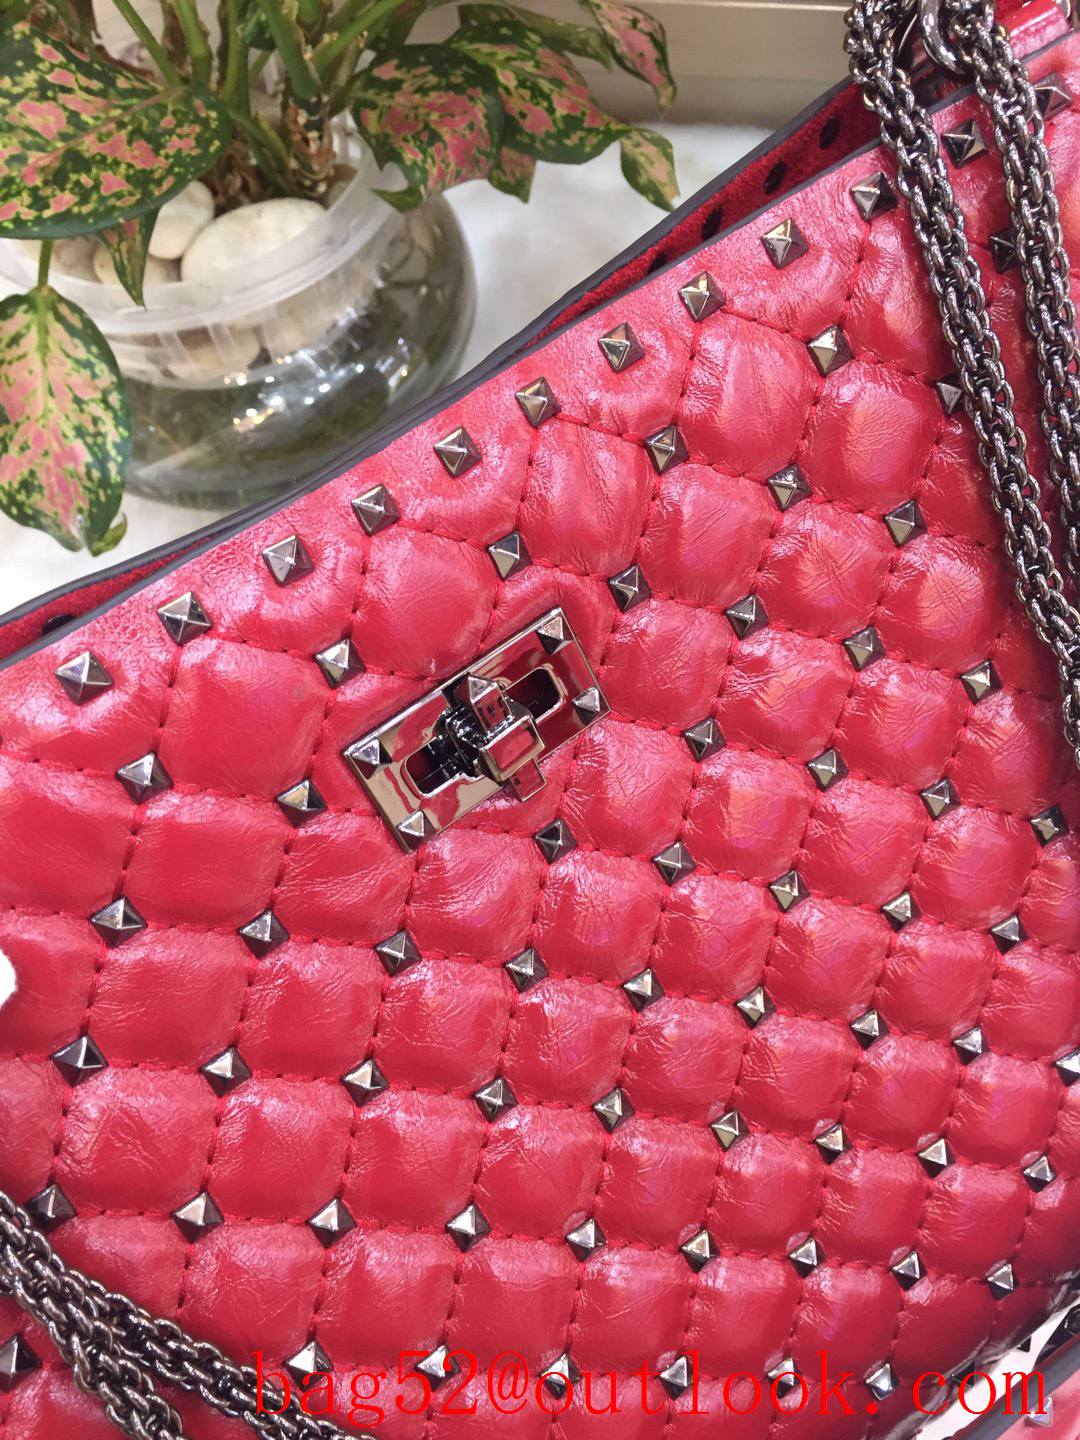 Valentino Rockstud Spike Chain Bag Leather Tote Handbag Tonal Studs